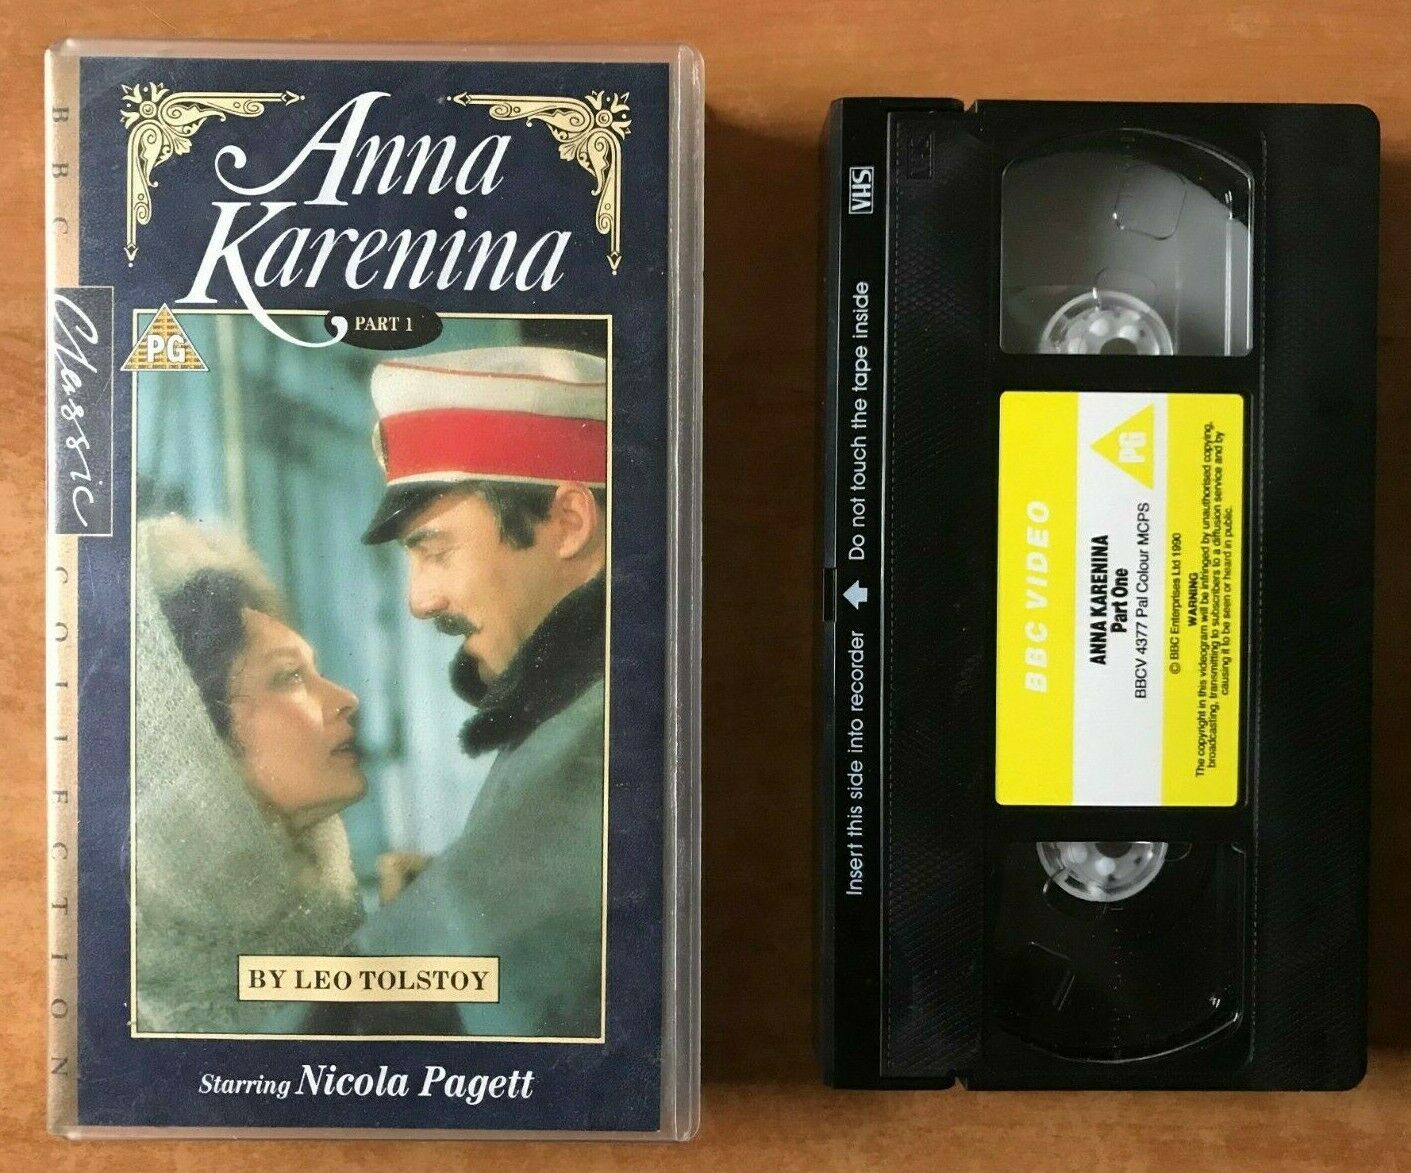 Anna Karenina (Part 1); [Leo Tolstoy]: BBC Classic - Nicola Pagett - Pal VHS-